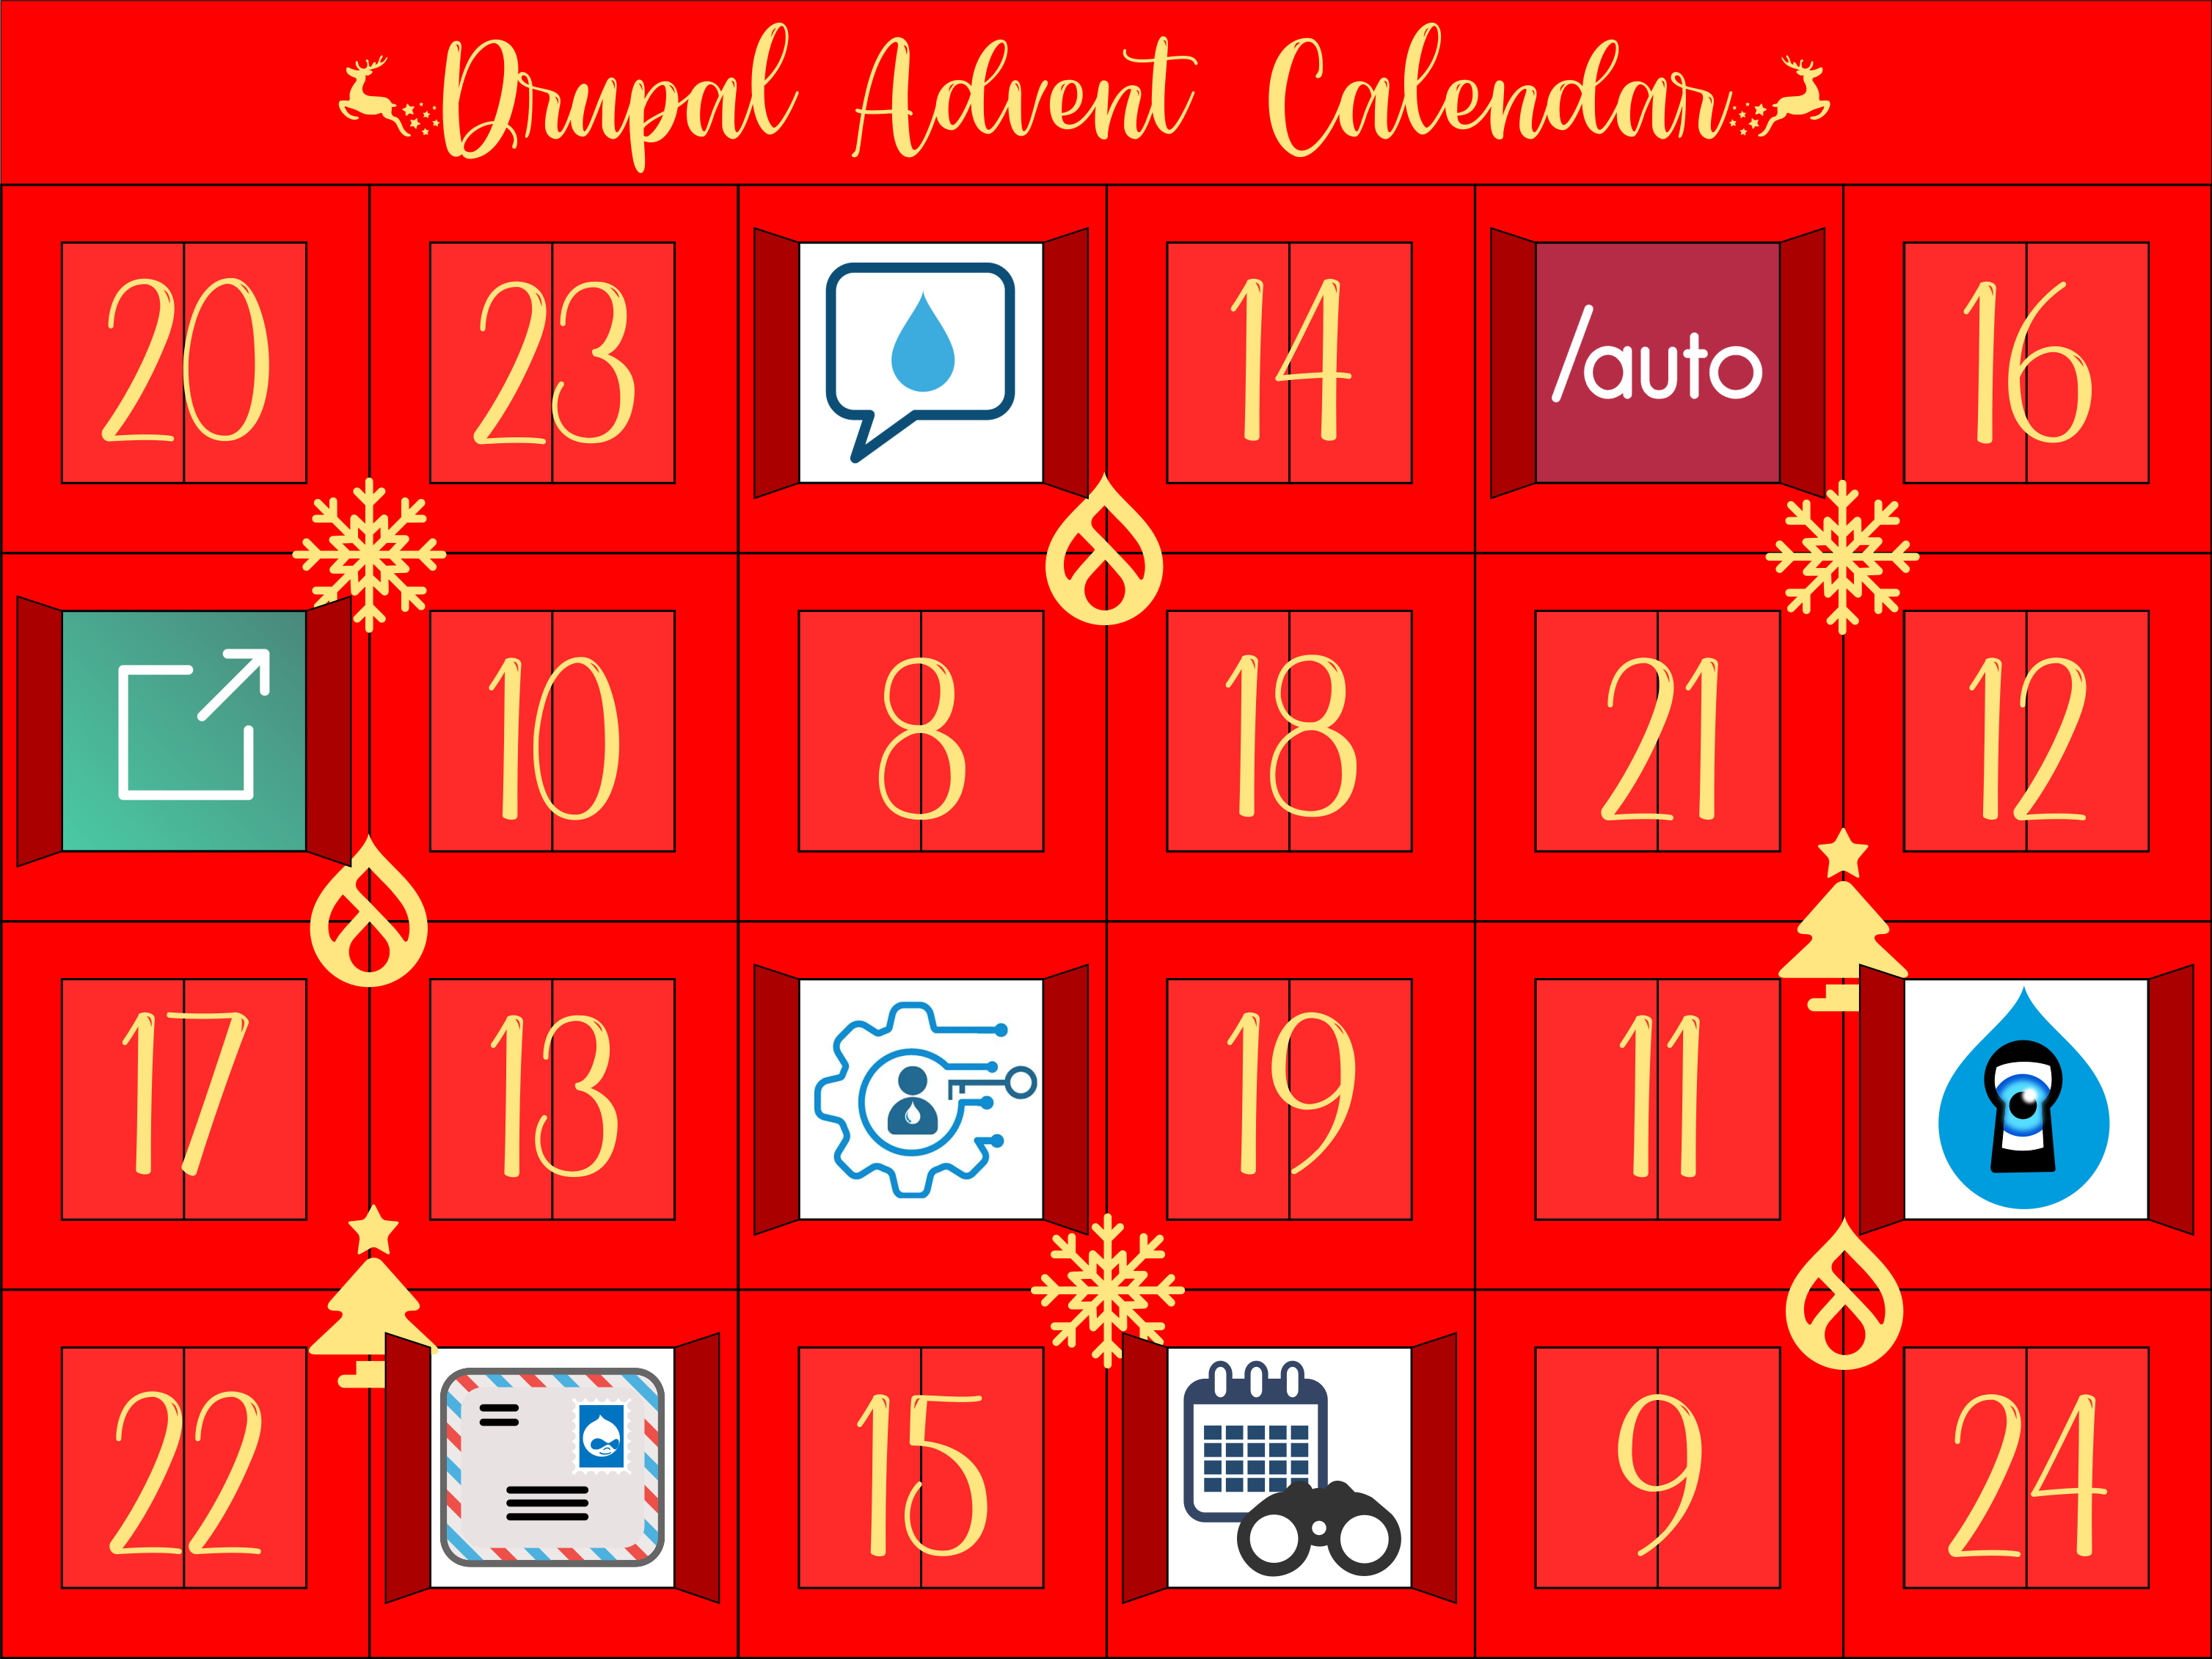 Advent Calendar with Door 7 open revealing the Address module